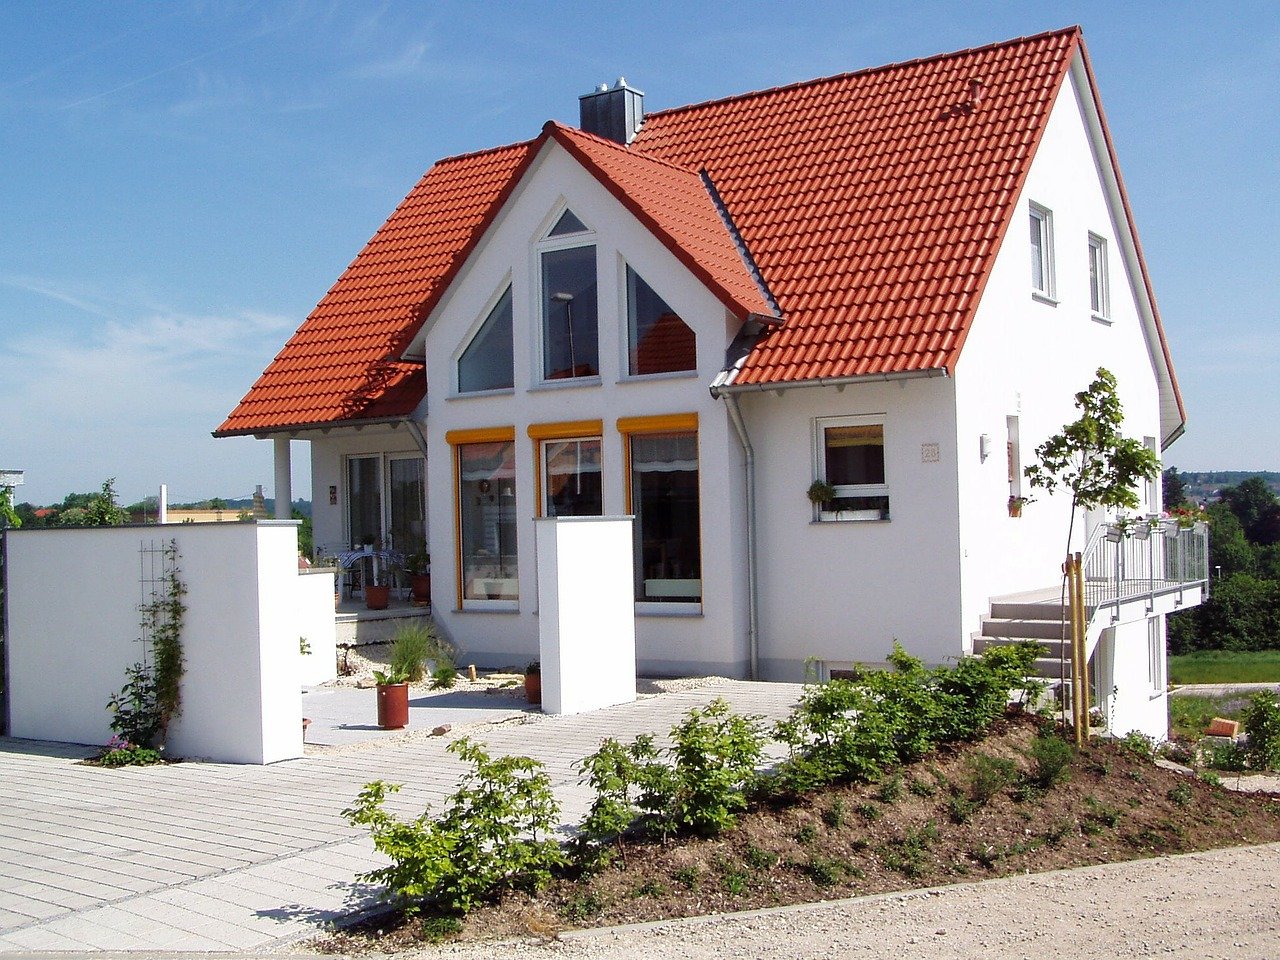 build an energy efficient home